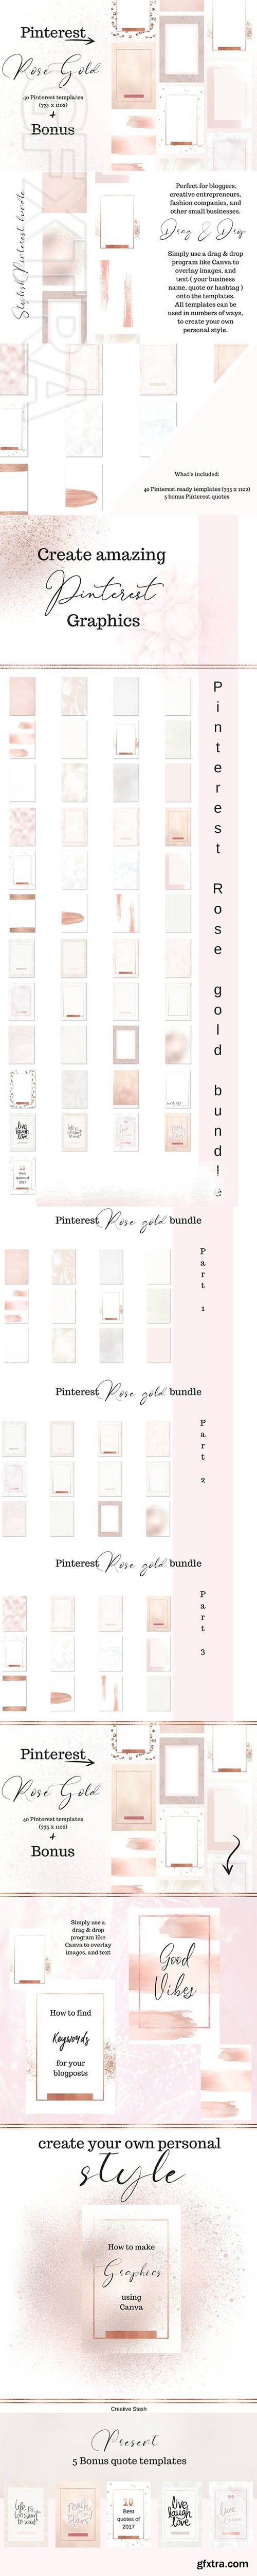 CreativeMarket - Pinterest rose gold bundle 2180476